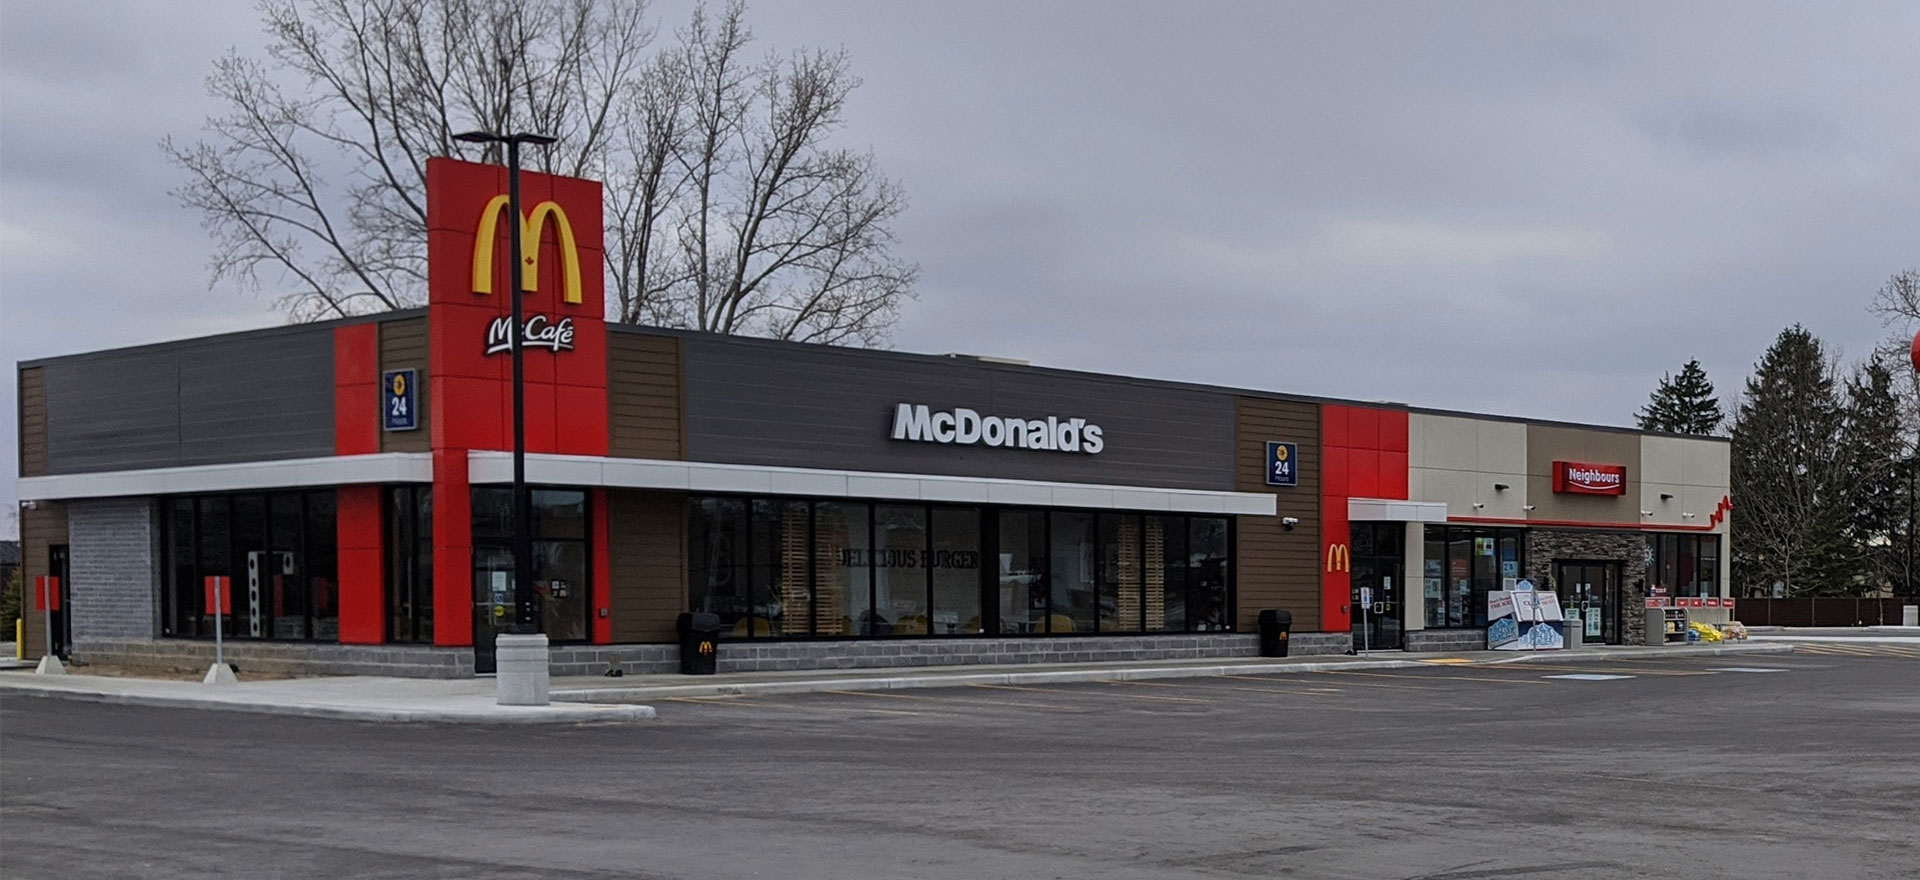 McDonald’s / Petro Canada development